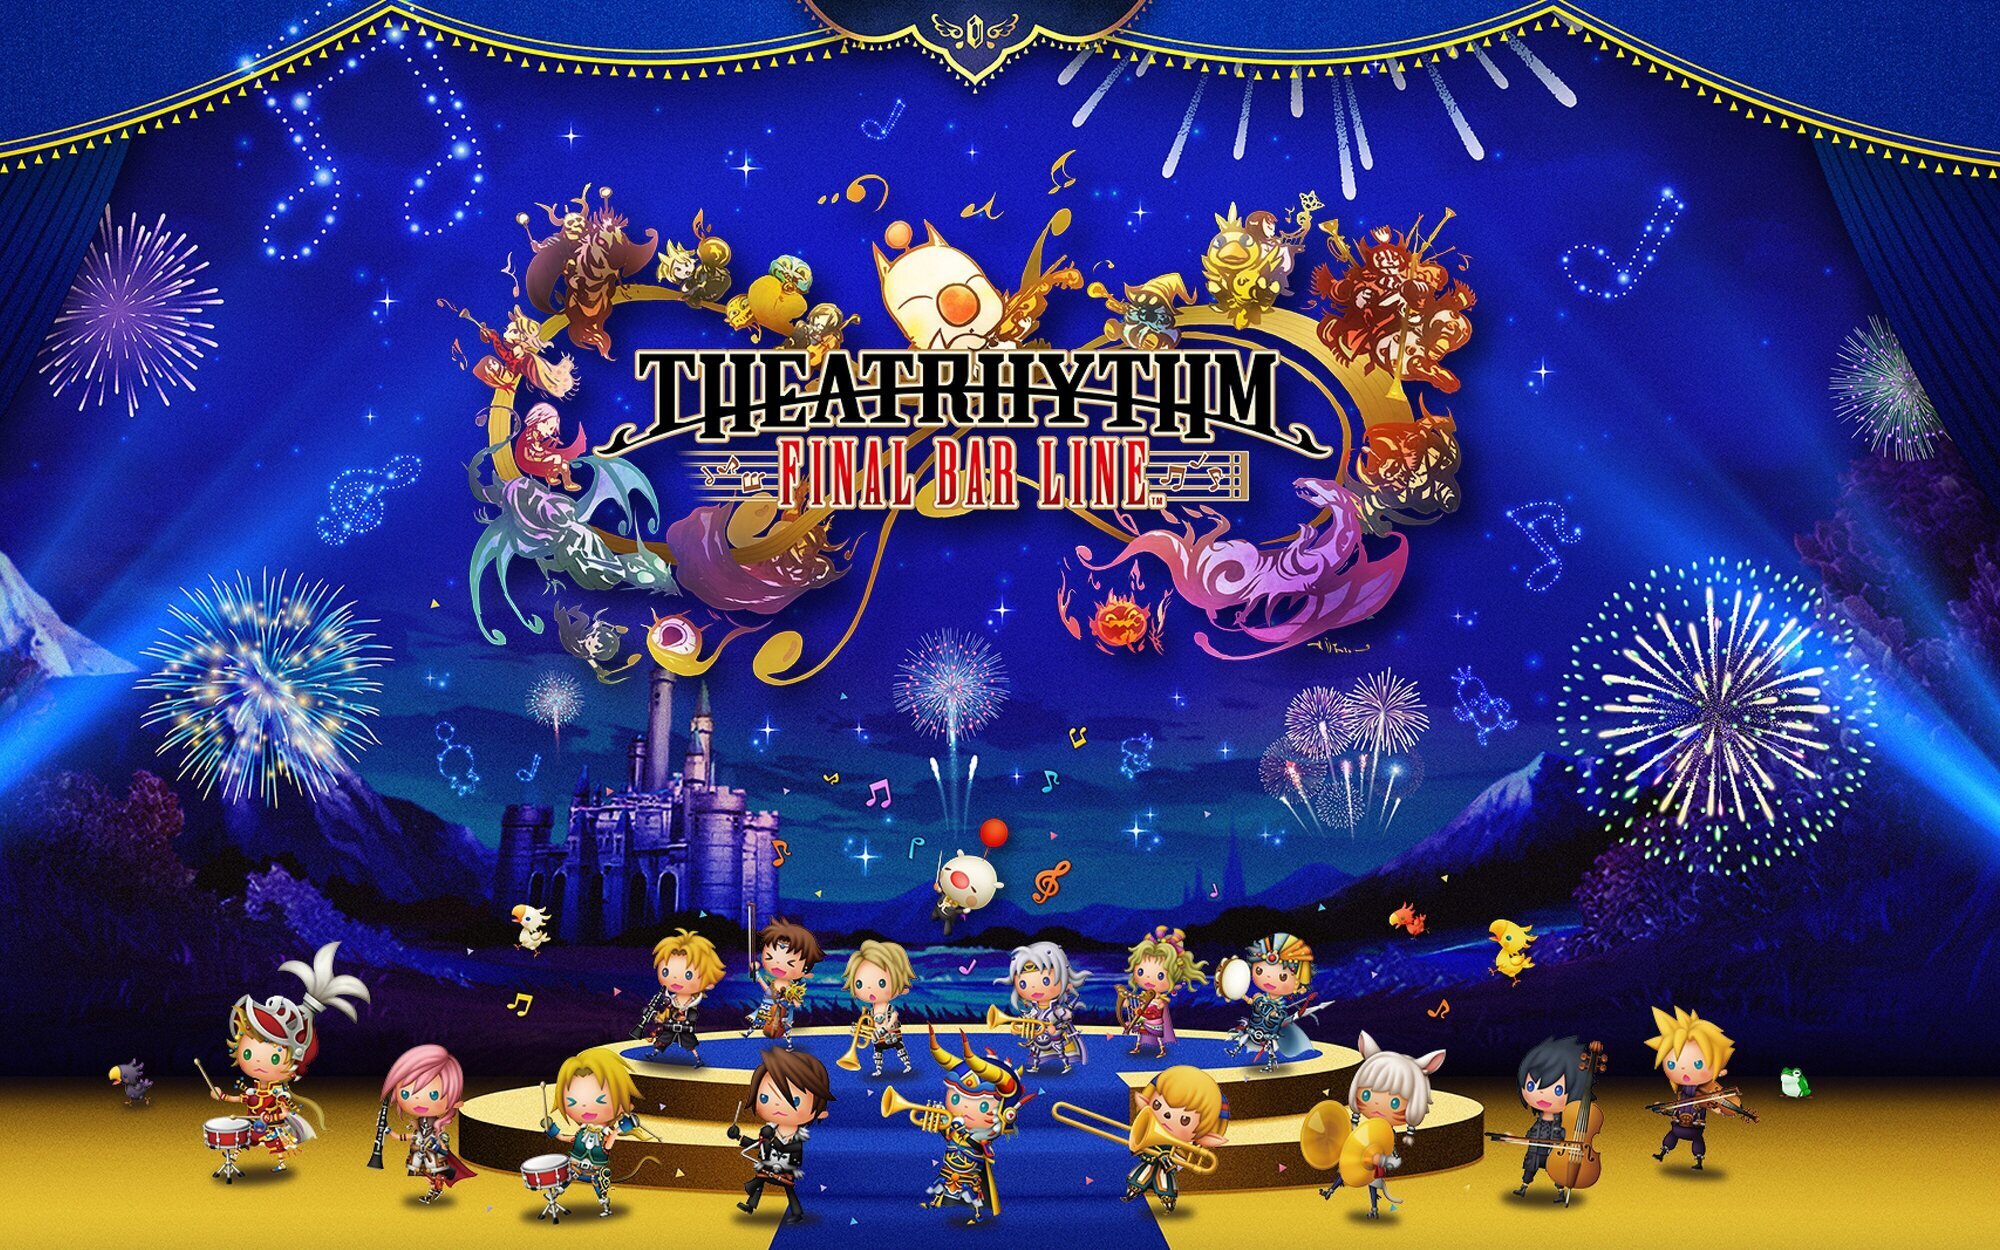 Análisis de 'Theatrhythm Final Bar Line' para PS4, fantasía musical sin final